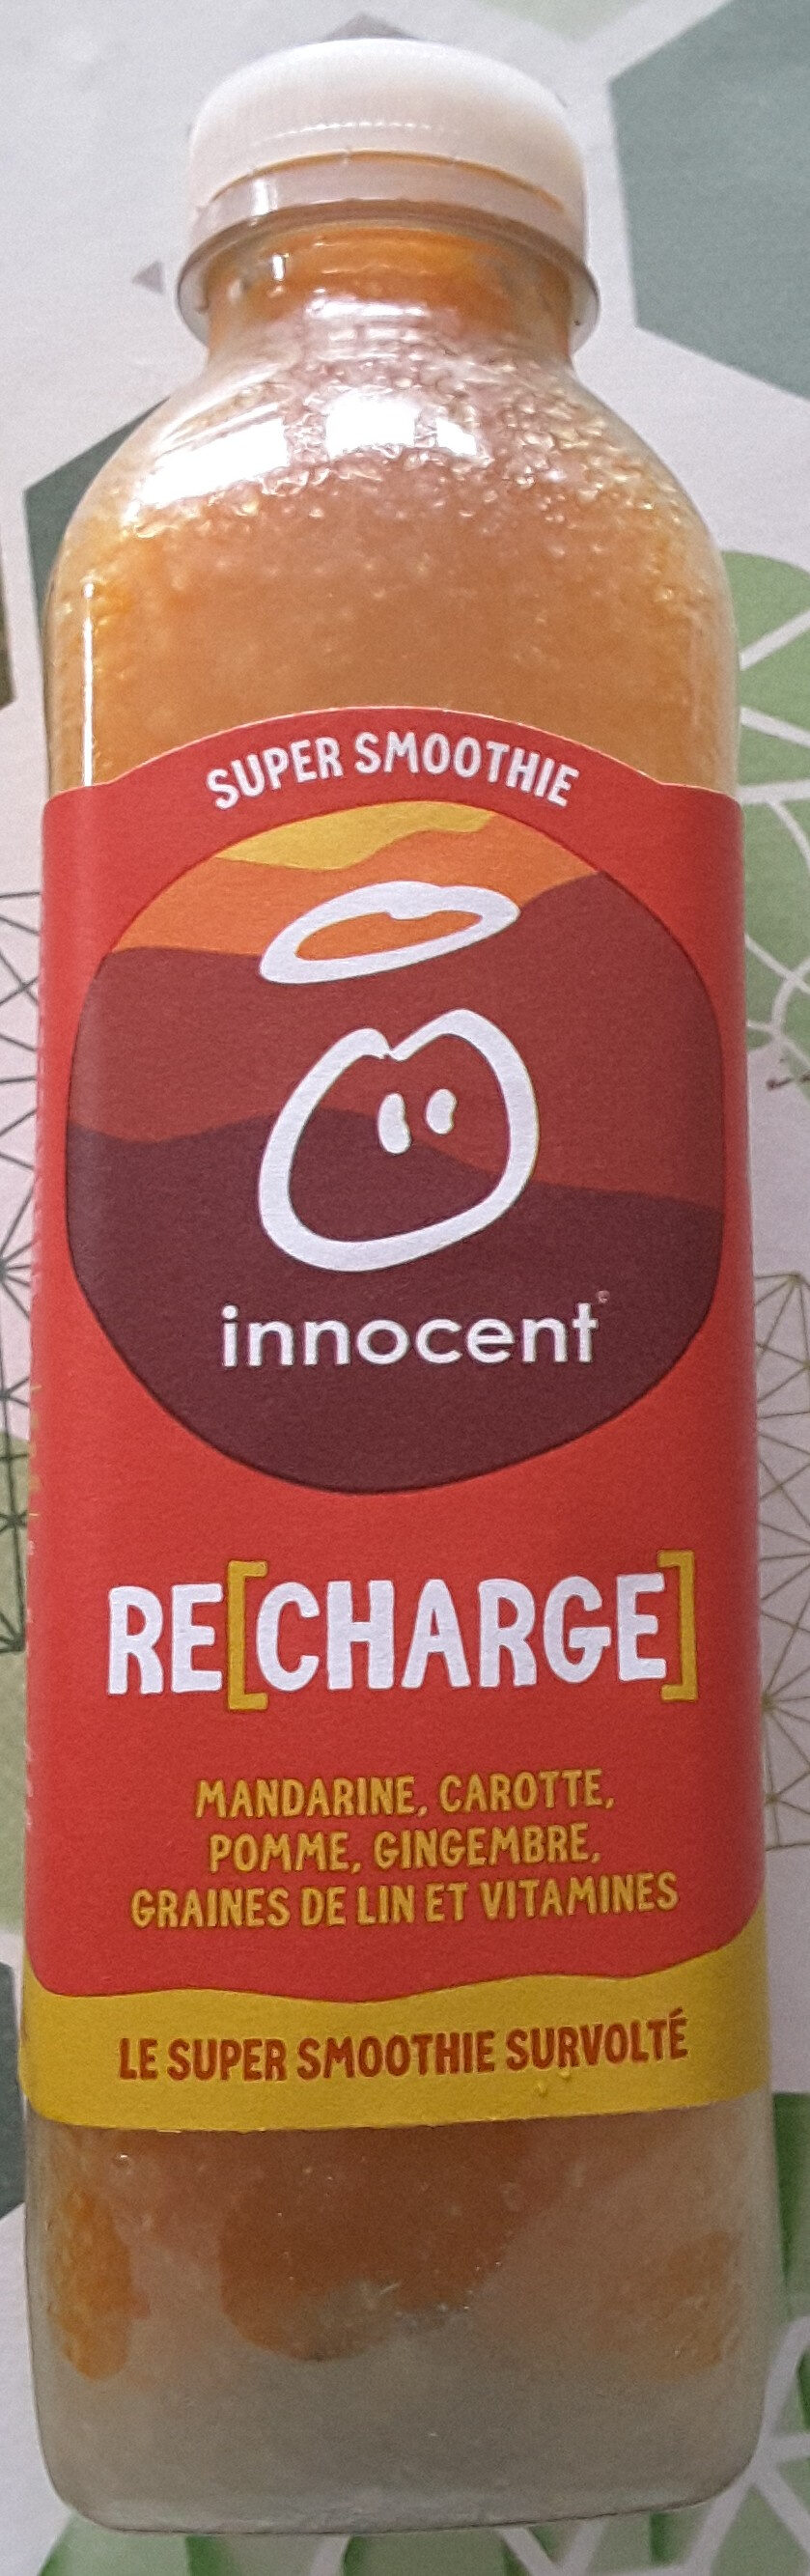 Innocent super smoothie recharge 750ml - Produit